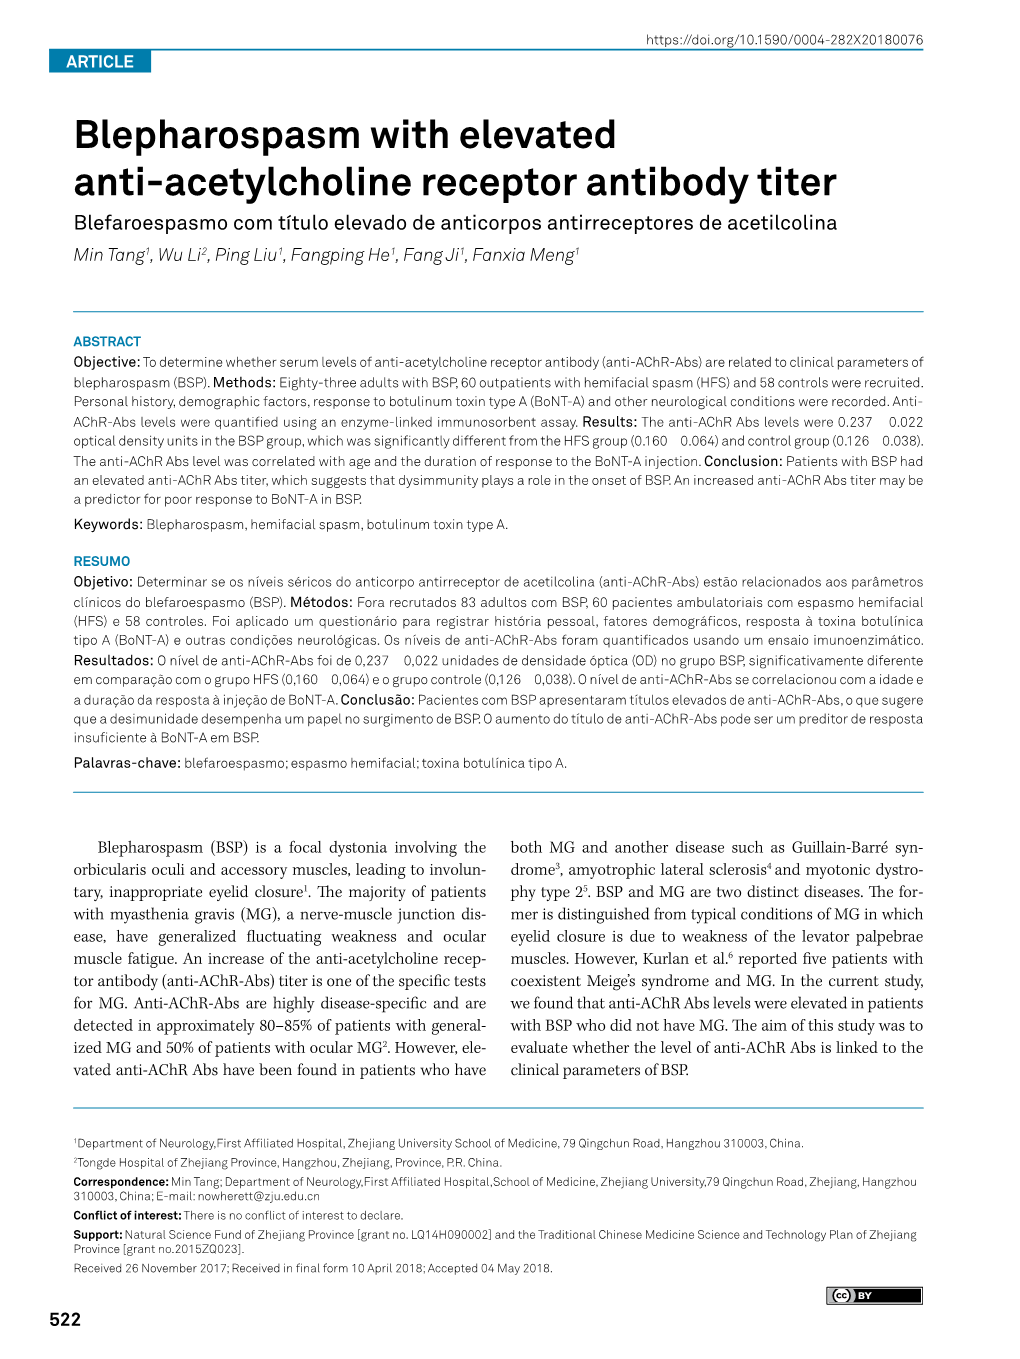 Blepharospasm with Elevated Anti-Acetylcholine Receptor Antibody Titer